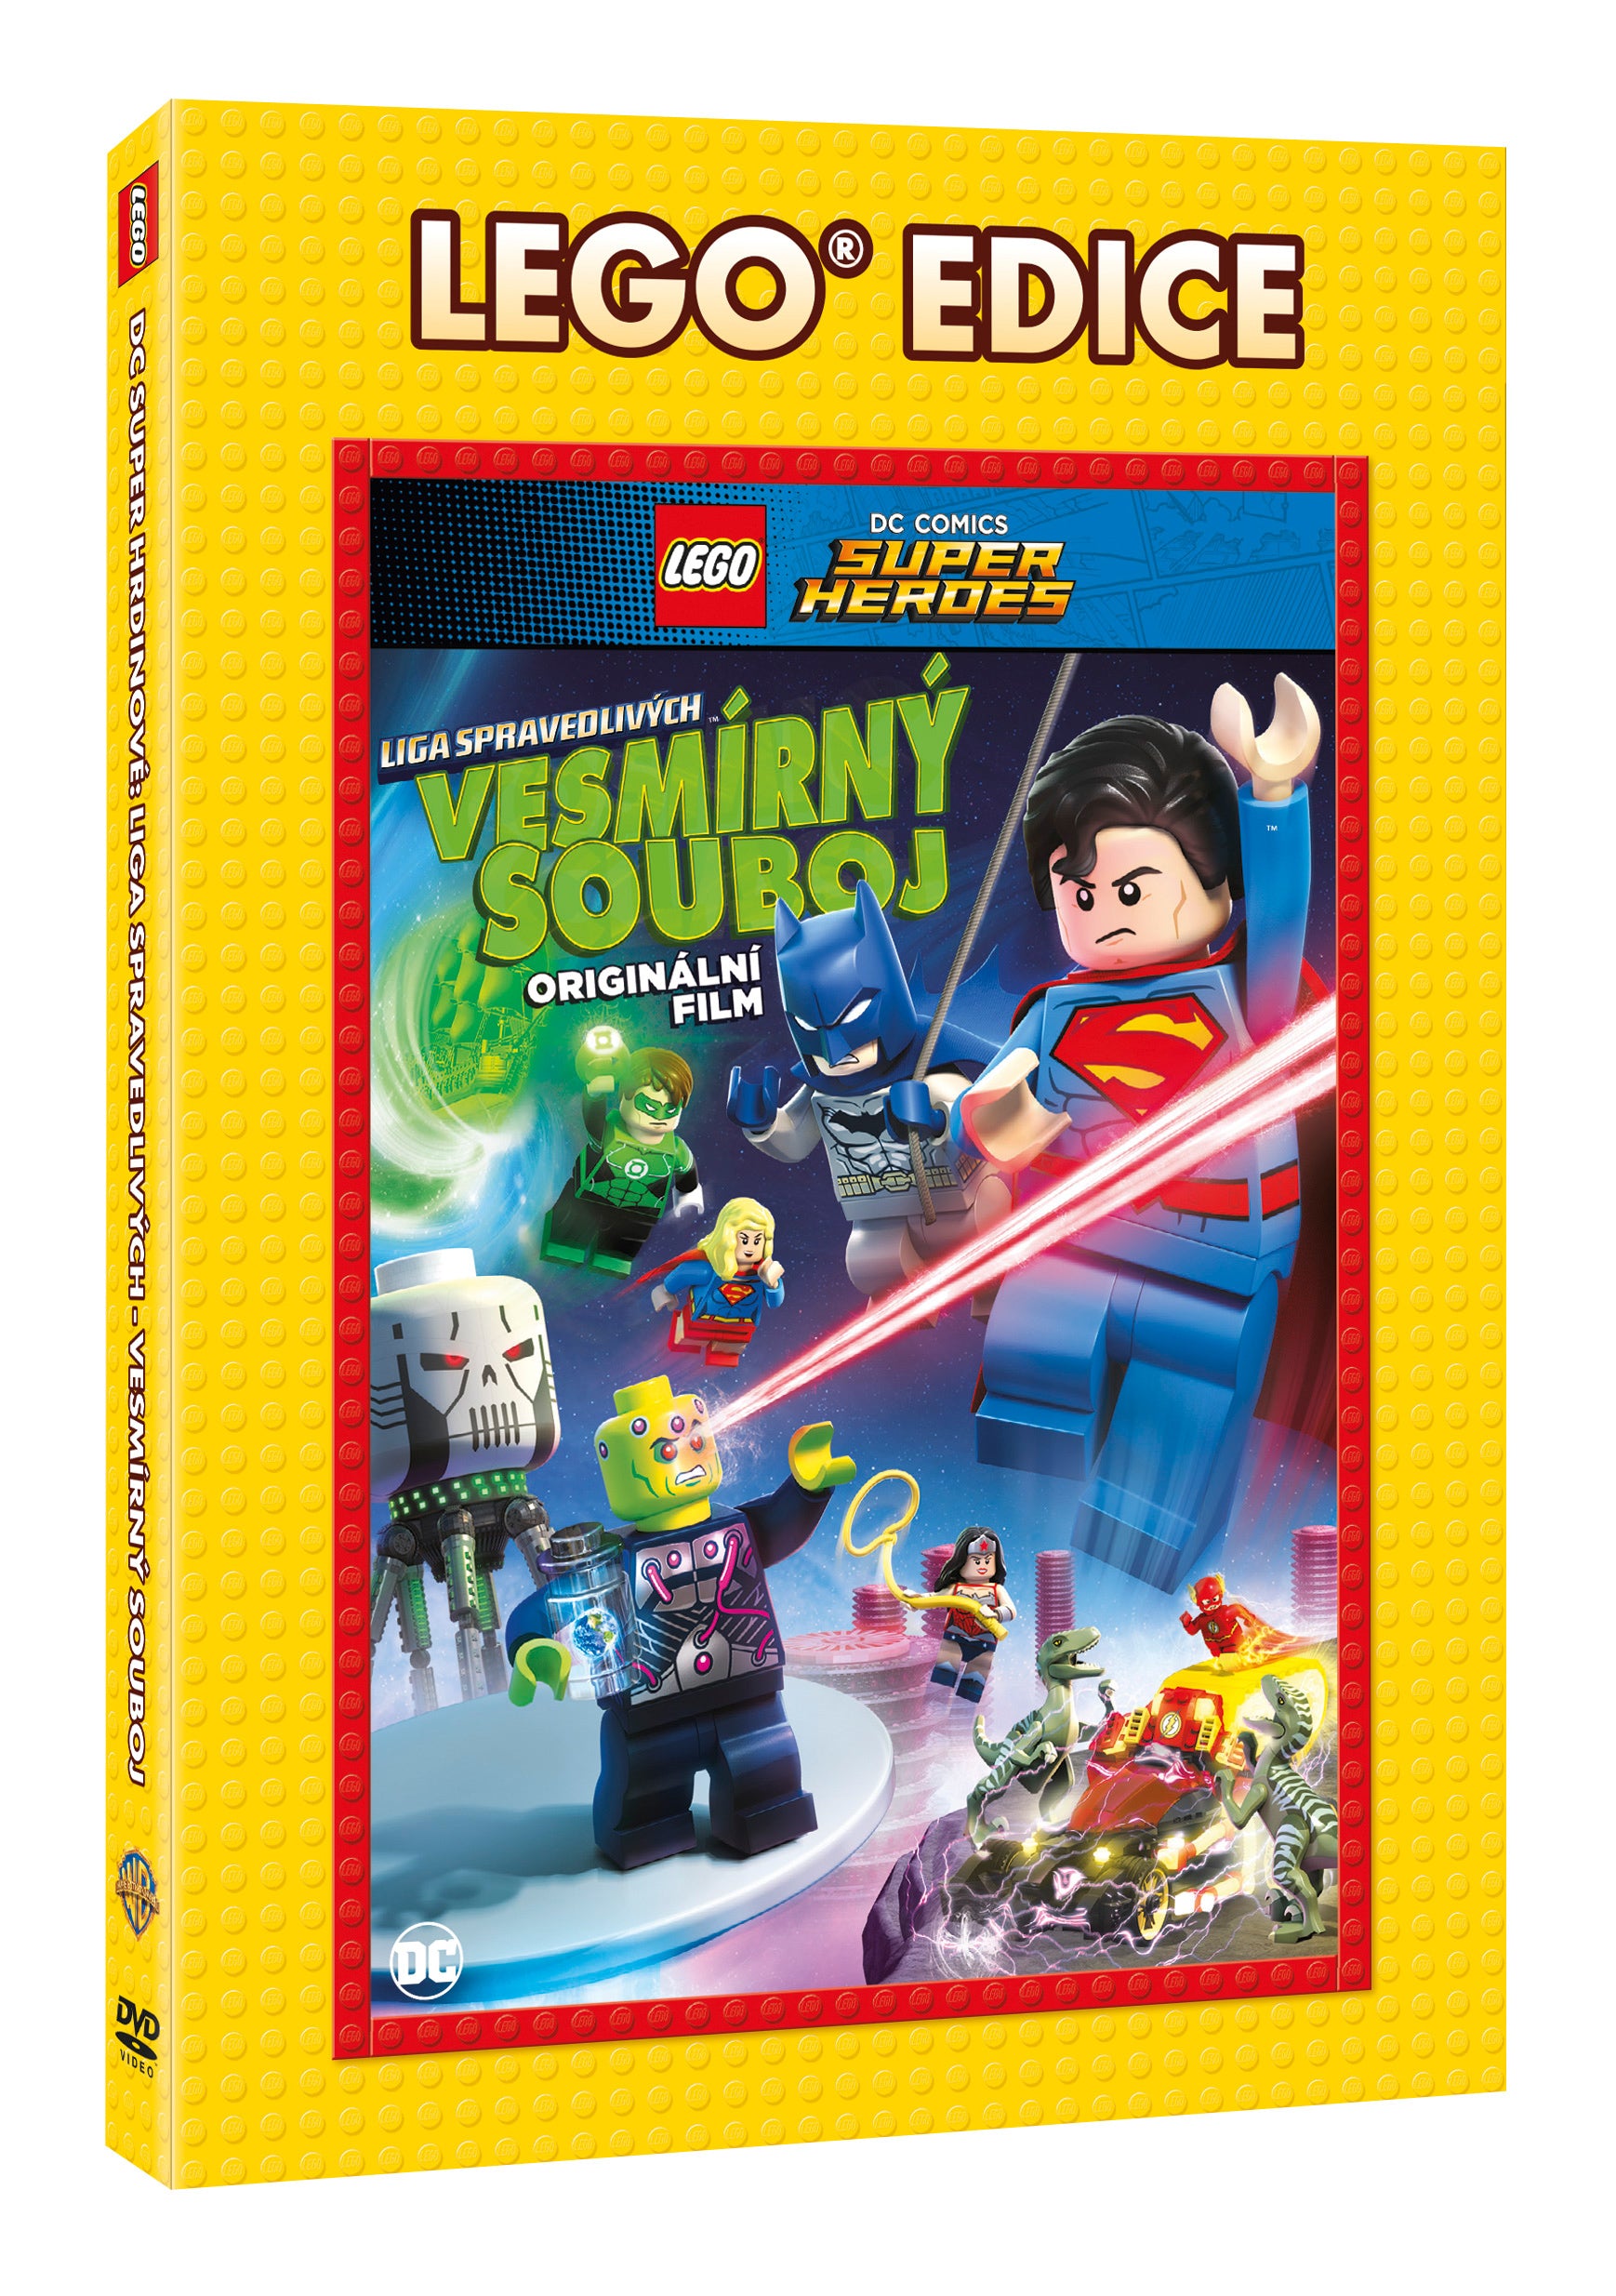 Lego DC Super hrdinove: Vesmirny souboj - Edice Lego filmy DVD / LEGO DC Super Heroes: Cosmic Clash